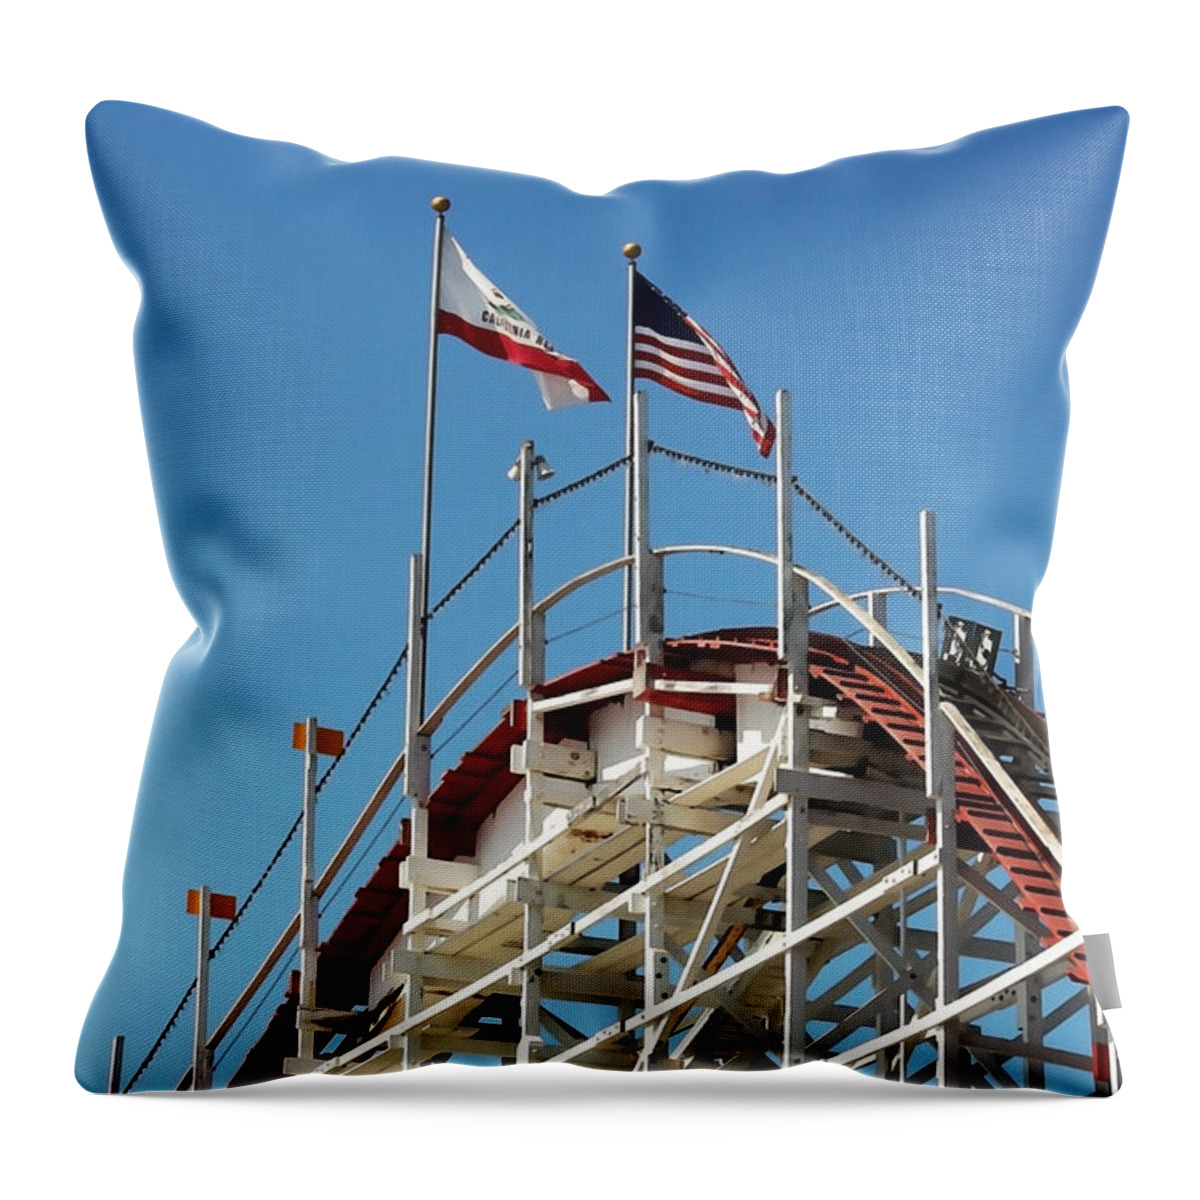 Santa Cruz California Throw Pillow featuring the photograph Wooden Roller Coaster by Art Block Collections